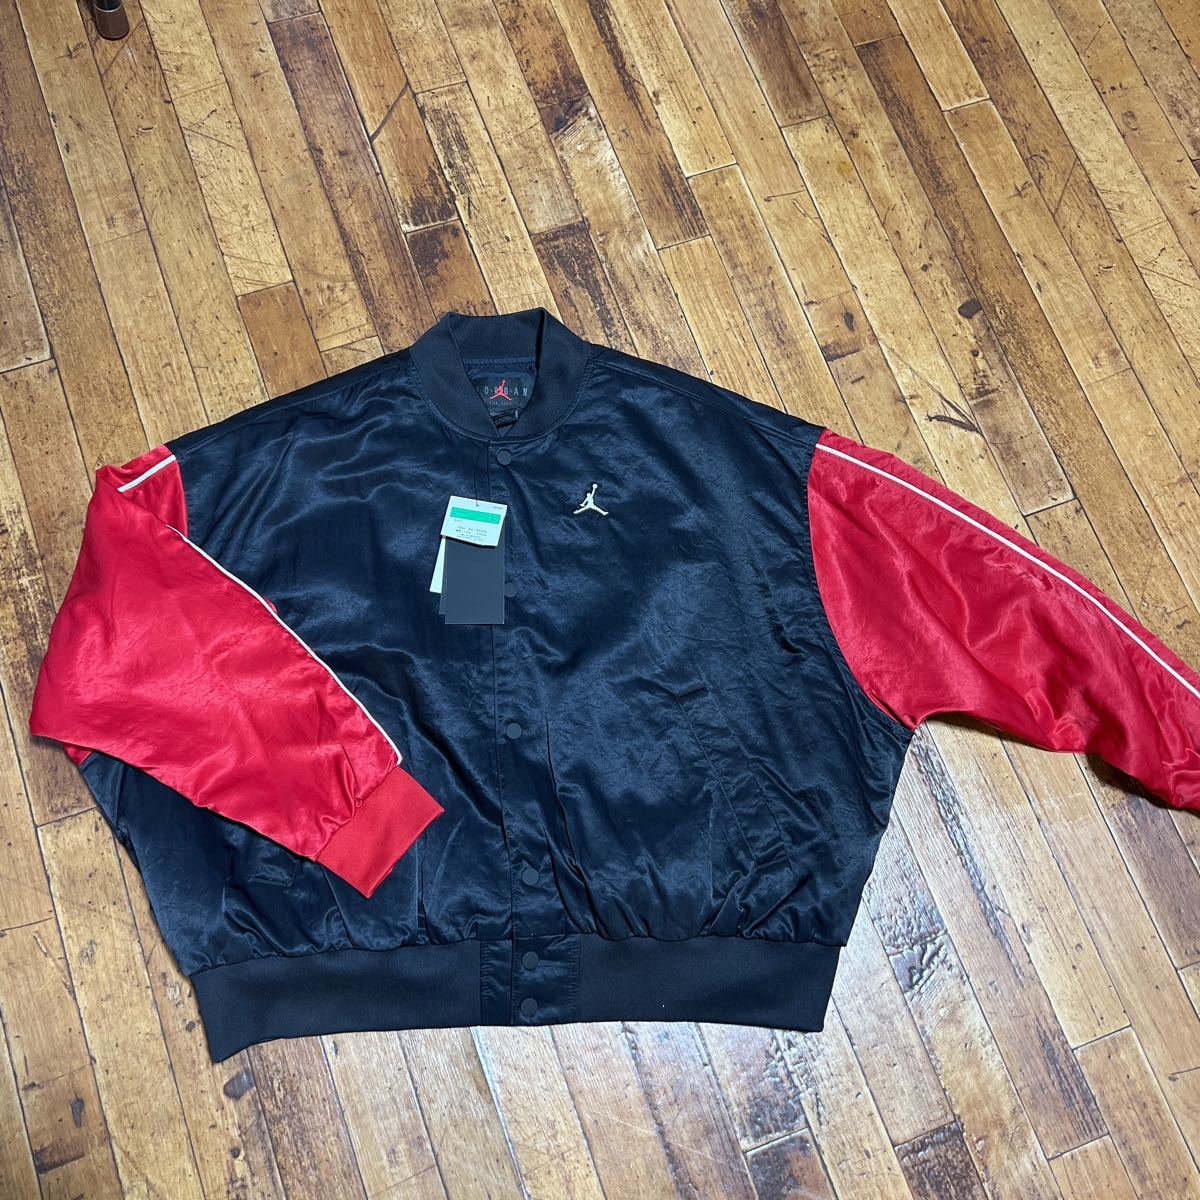 NIKE Nike Jordan "куртка пилота" wi мужской чёрный красный XL блузон MA-1